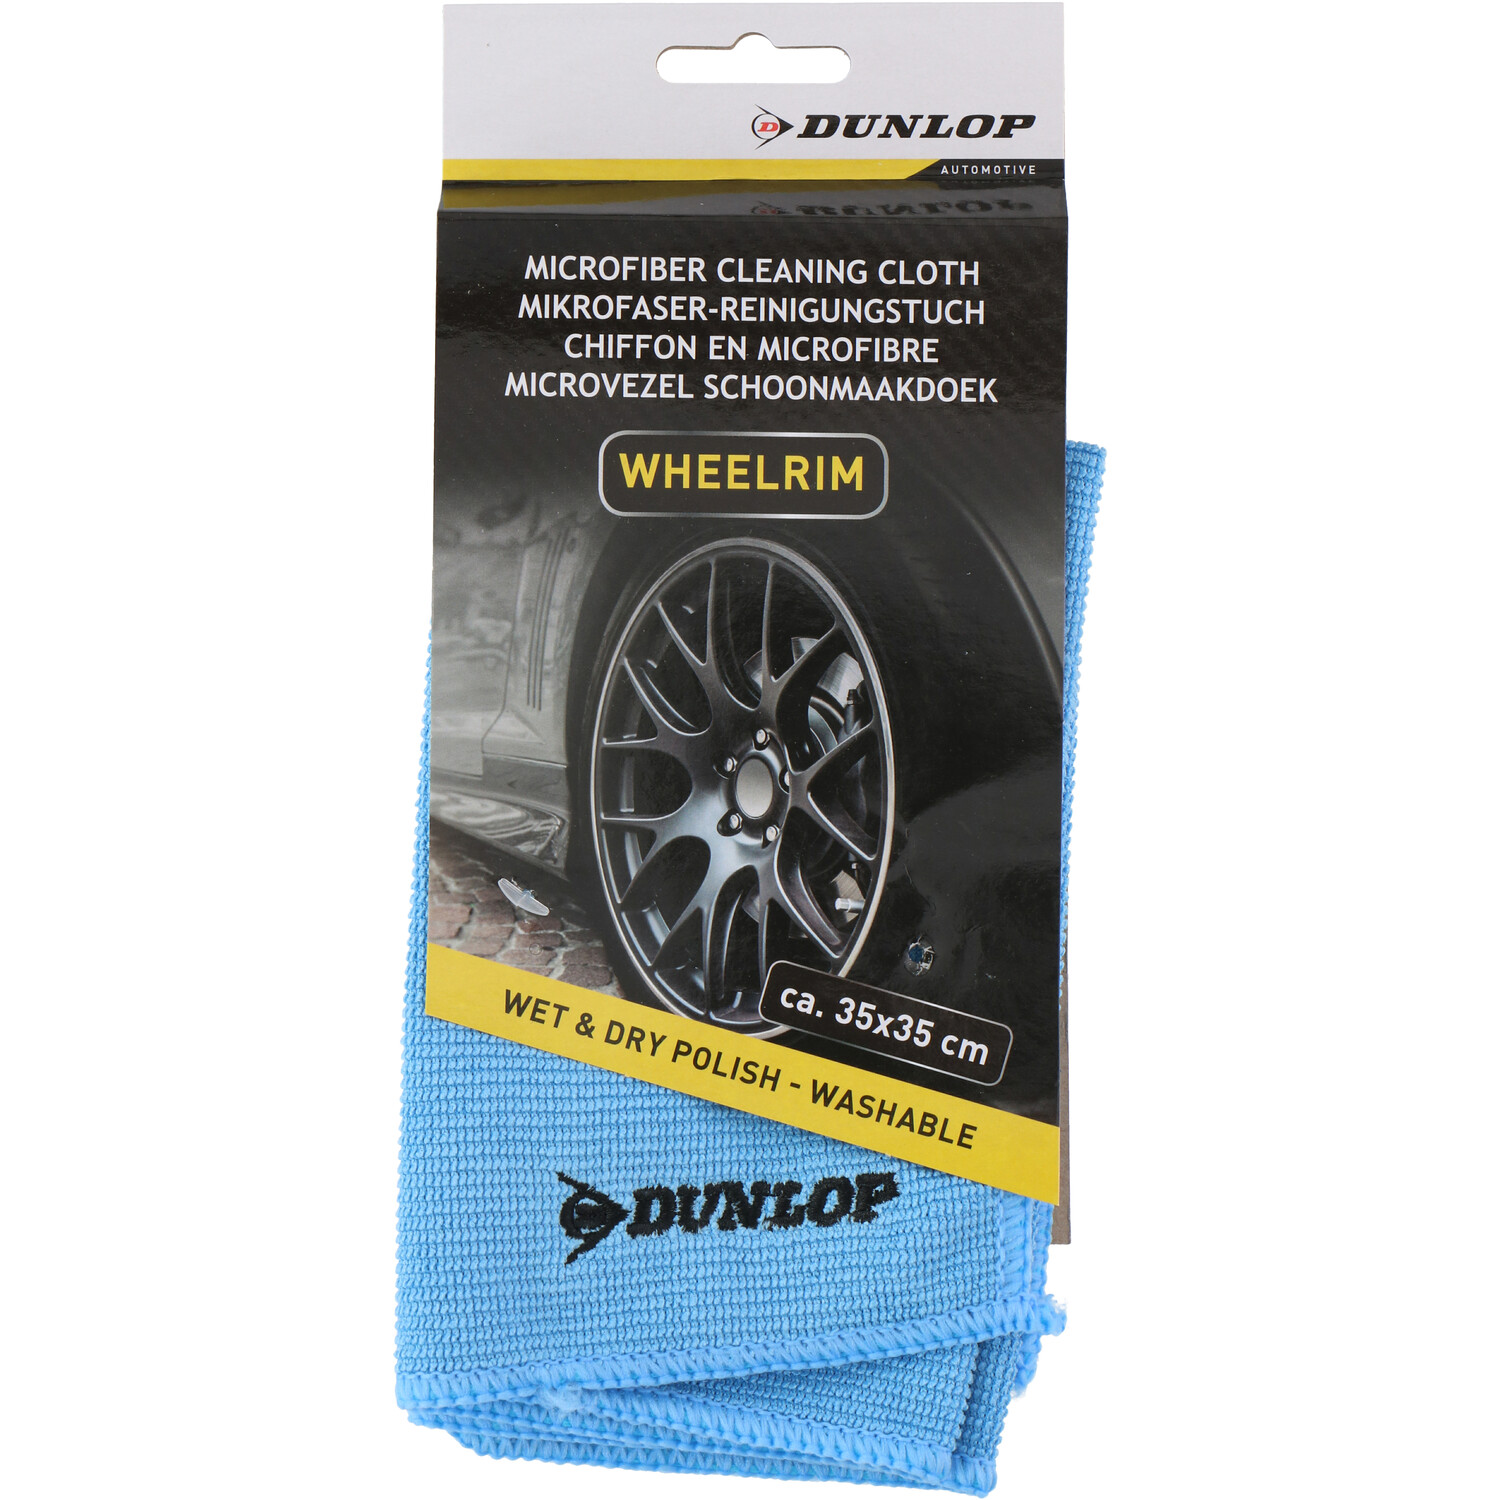 Dunlop Microfibre Cloth - Wheelrim Image 1